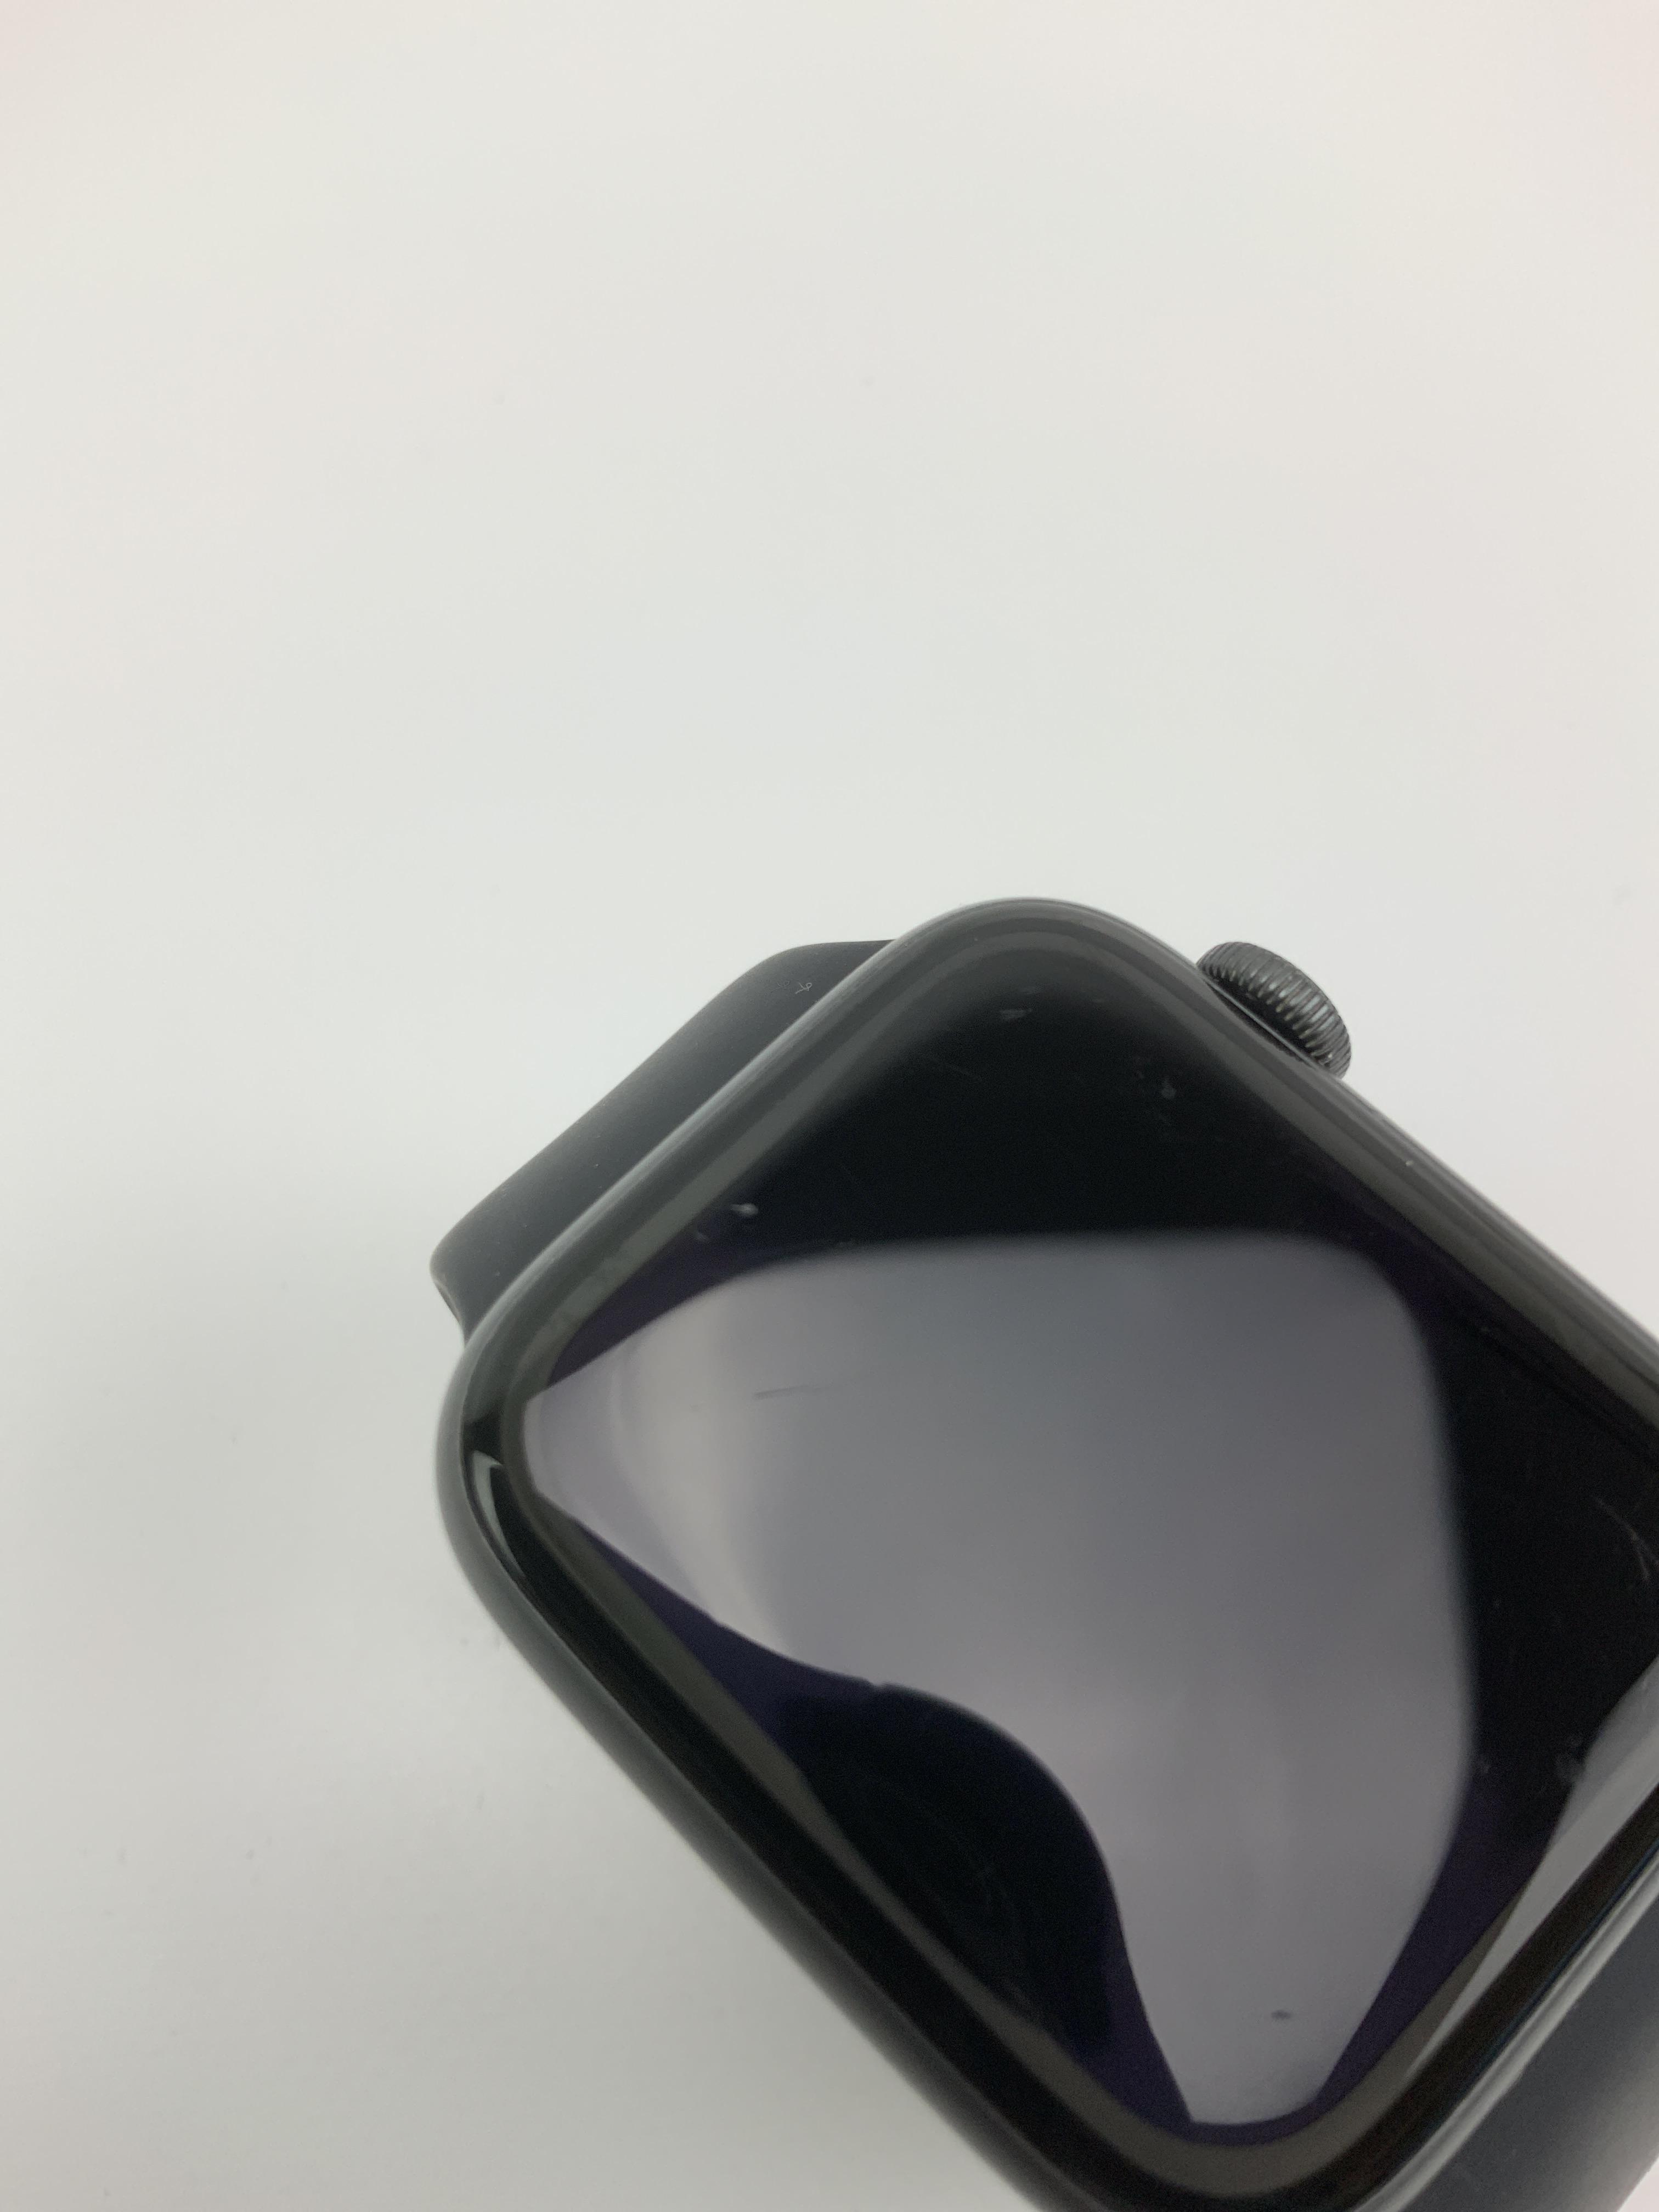 Watch Series 5 Aluminum (44mm), Space Gray, bild 3